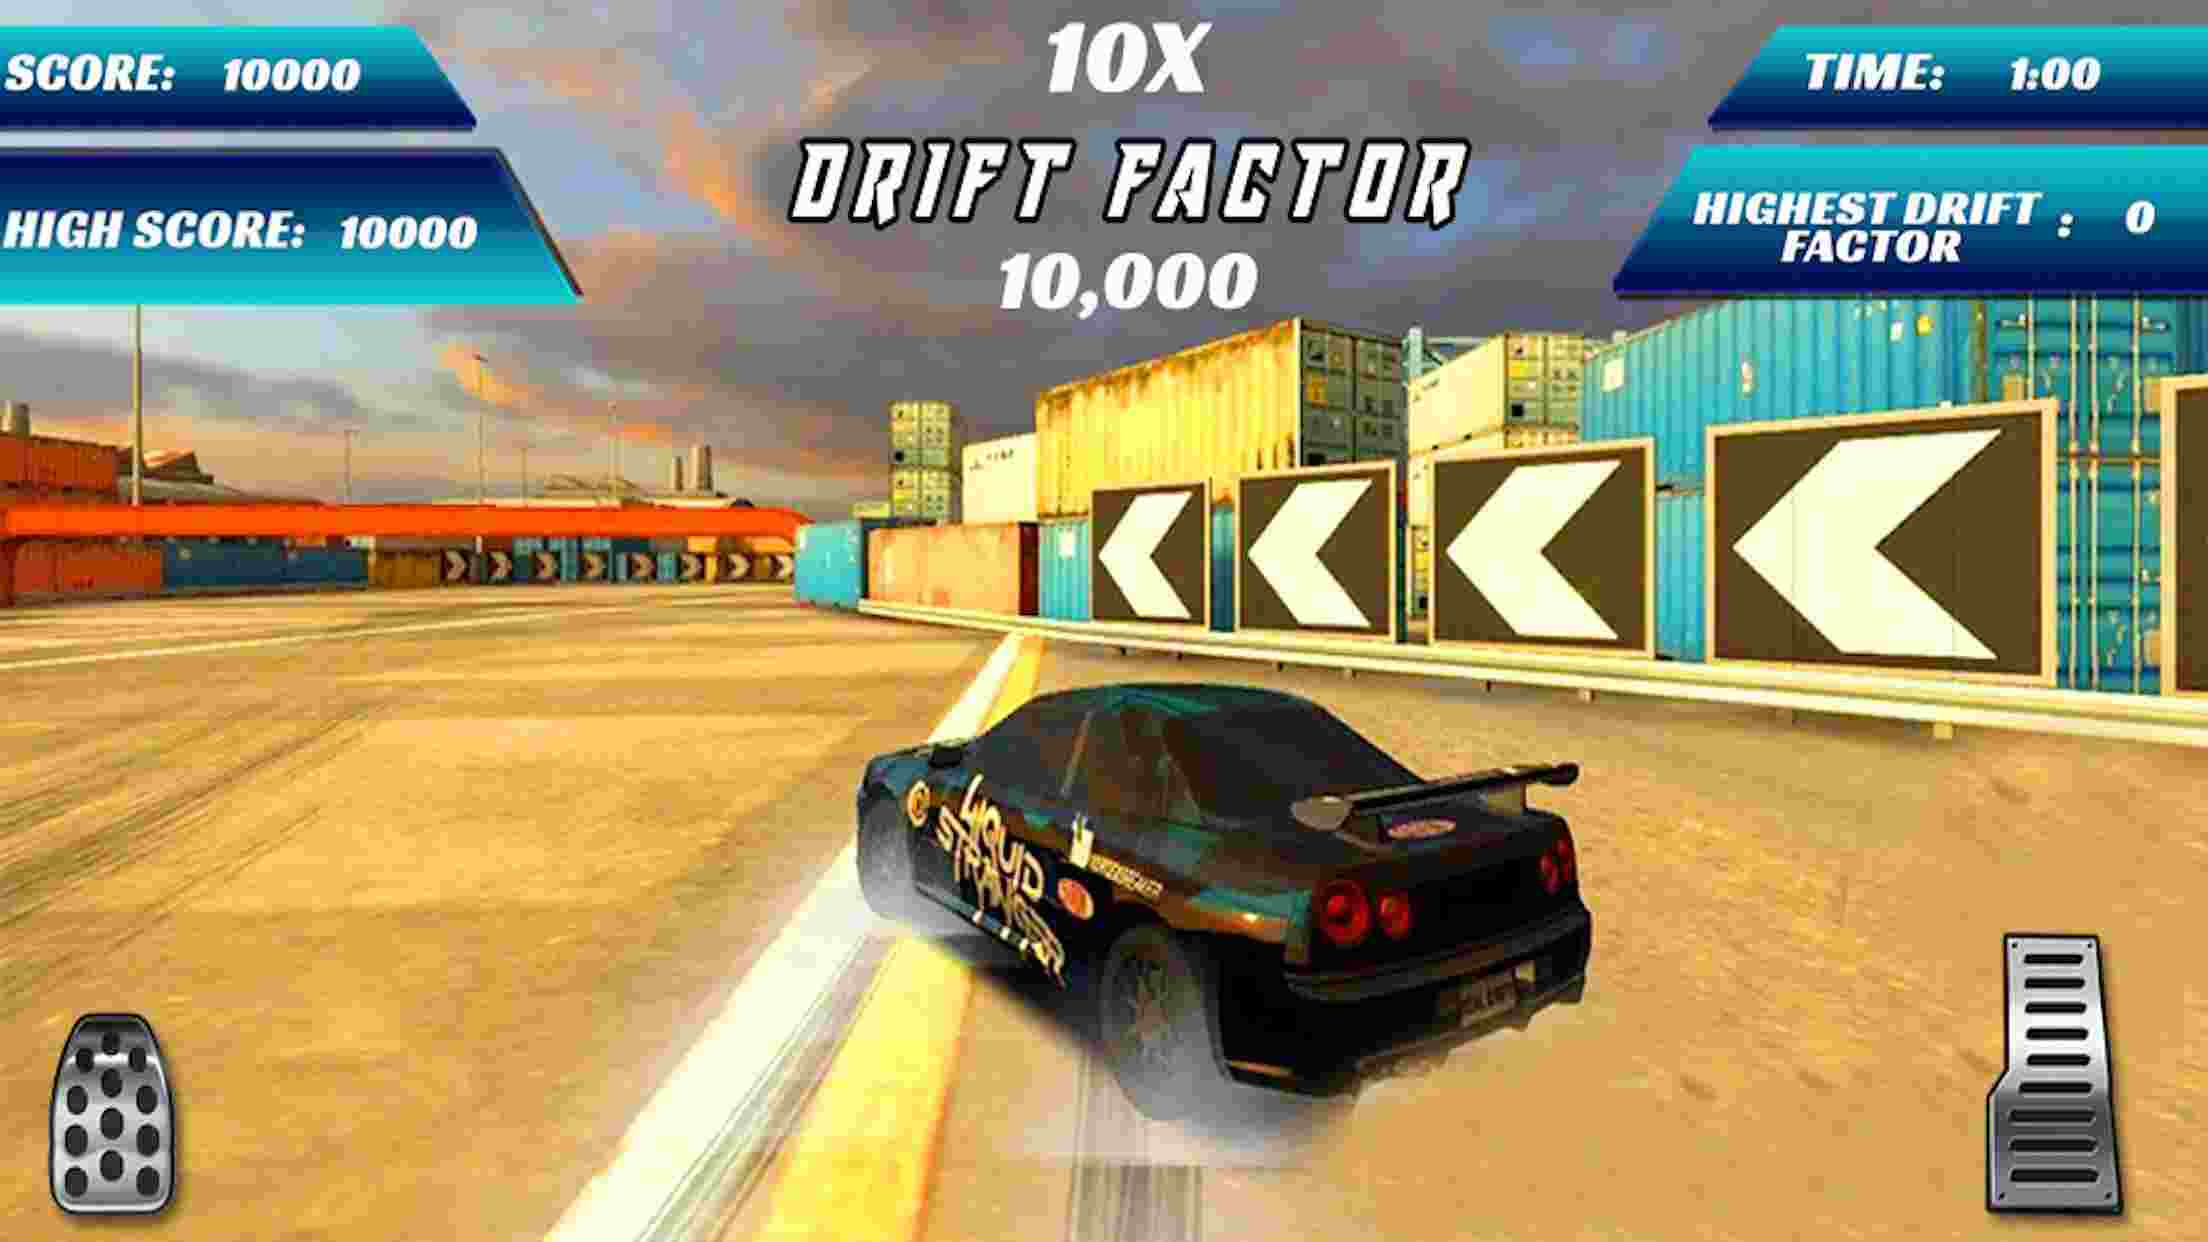 Real Drift Car Racing game mod hack